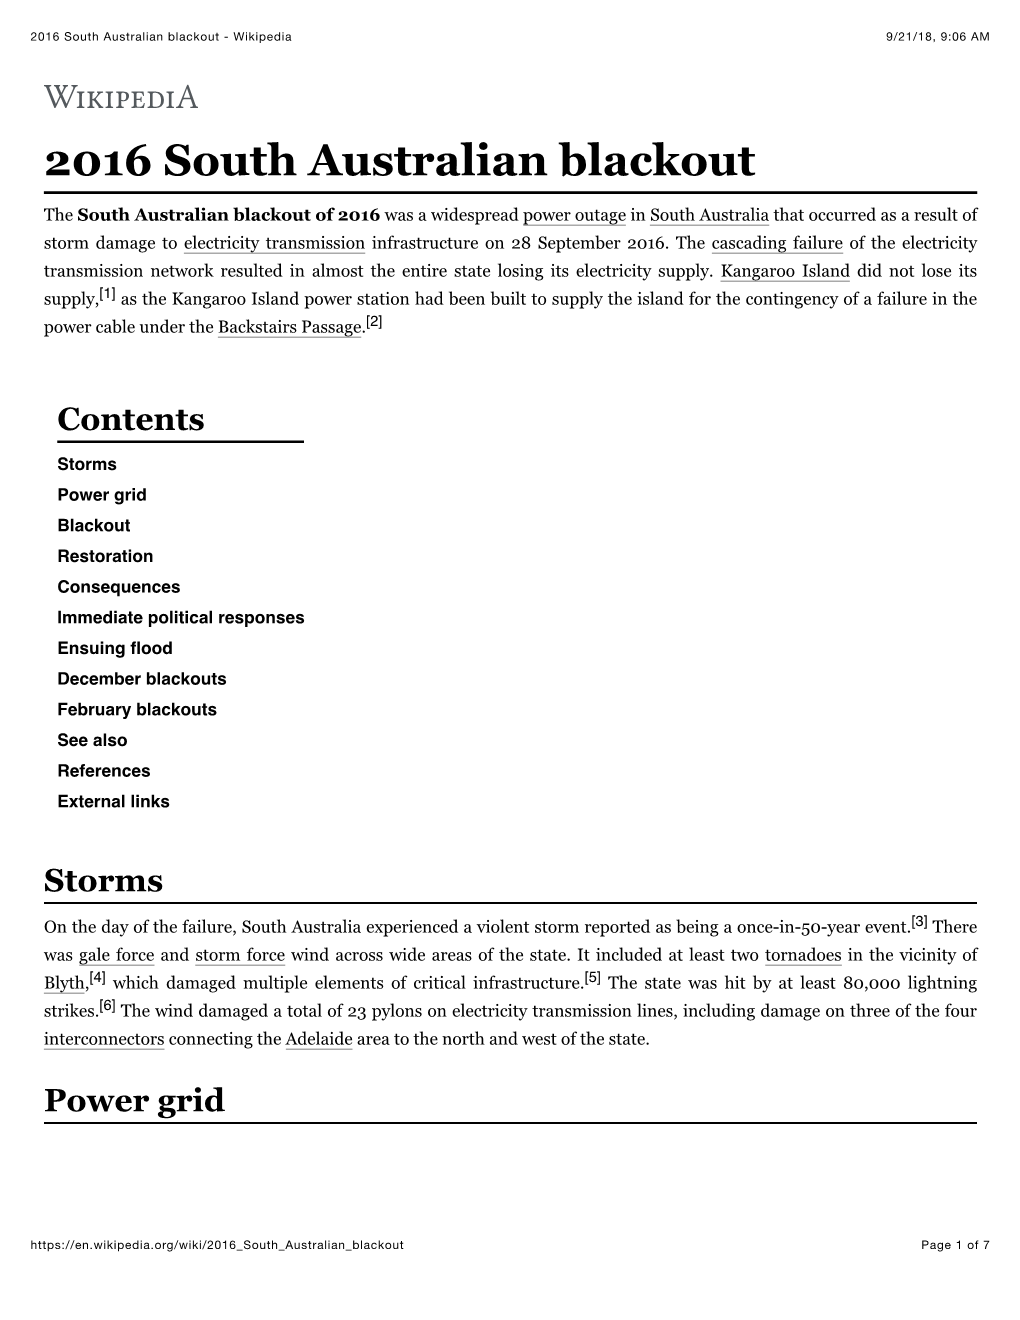 2016 South Australian Blackout - Wikipedia 9/21/18, 9:06 AM